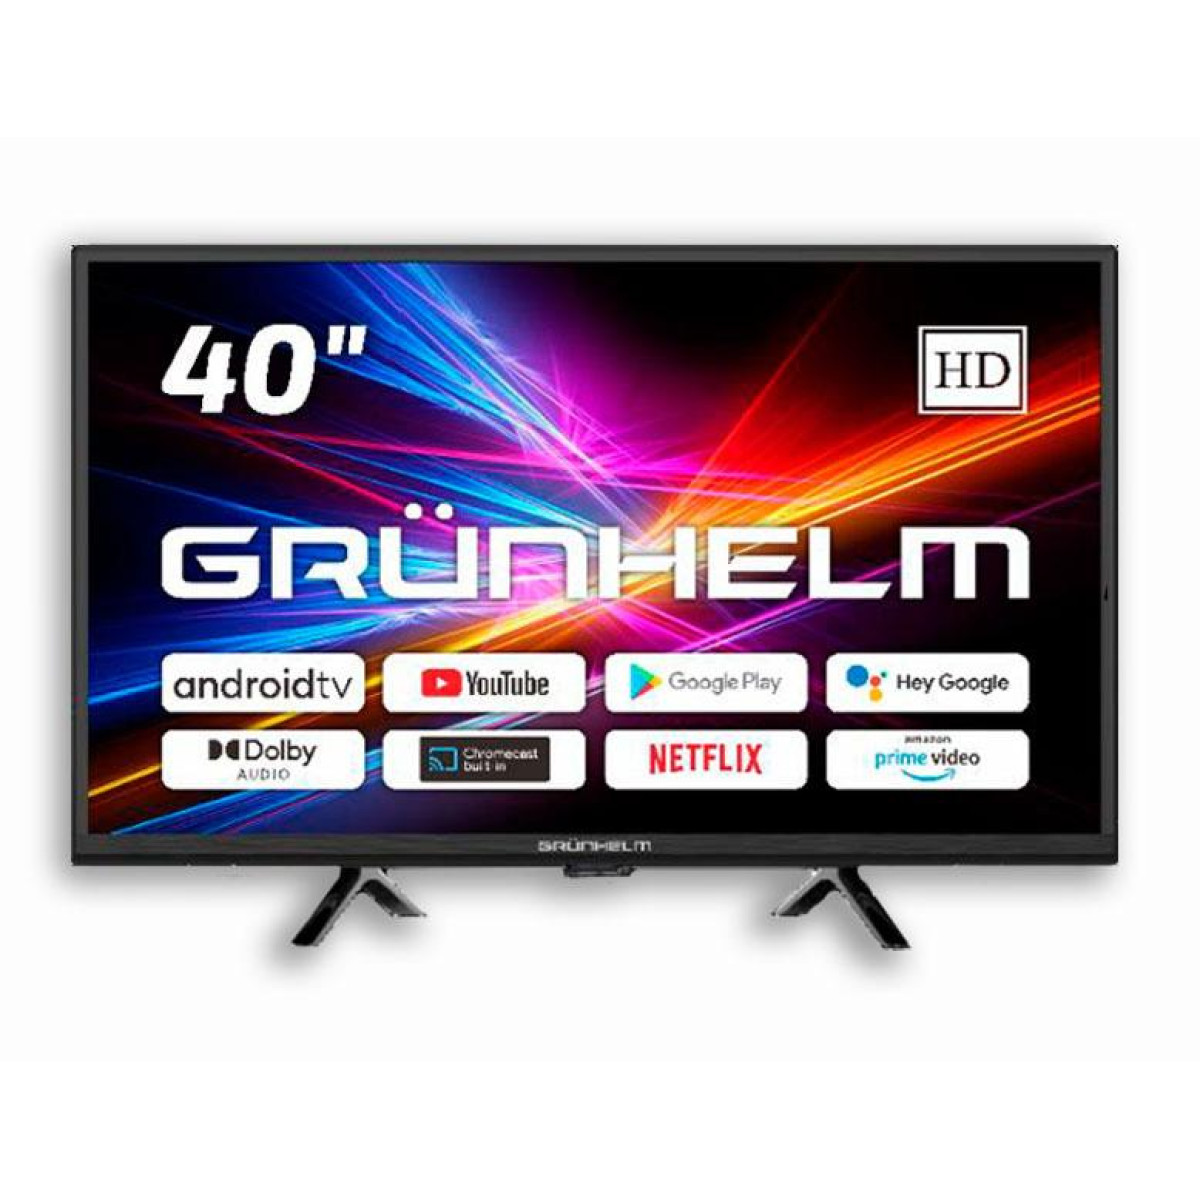 Телевизор Grunhelm 40F300-GA11 40"